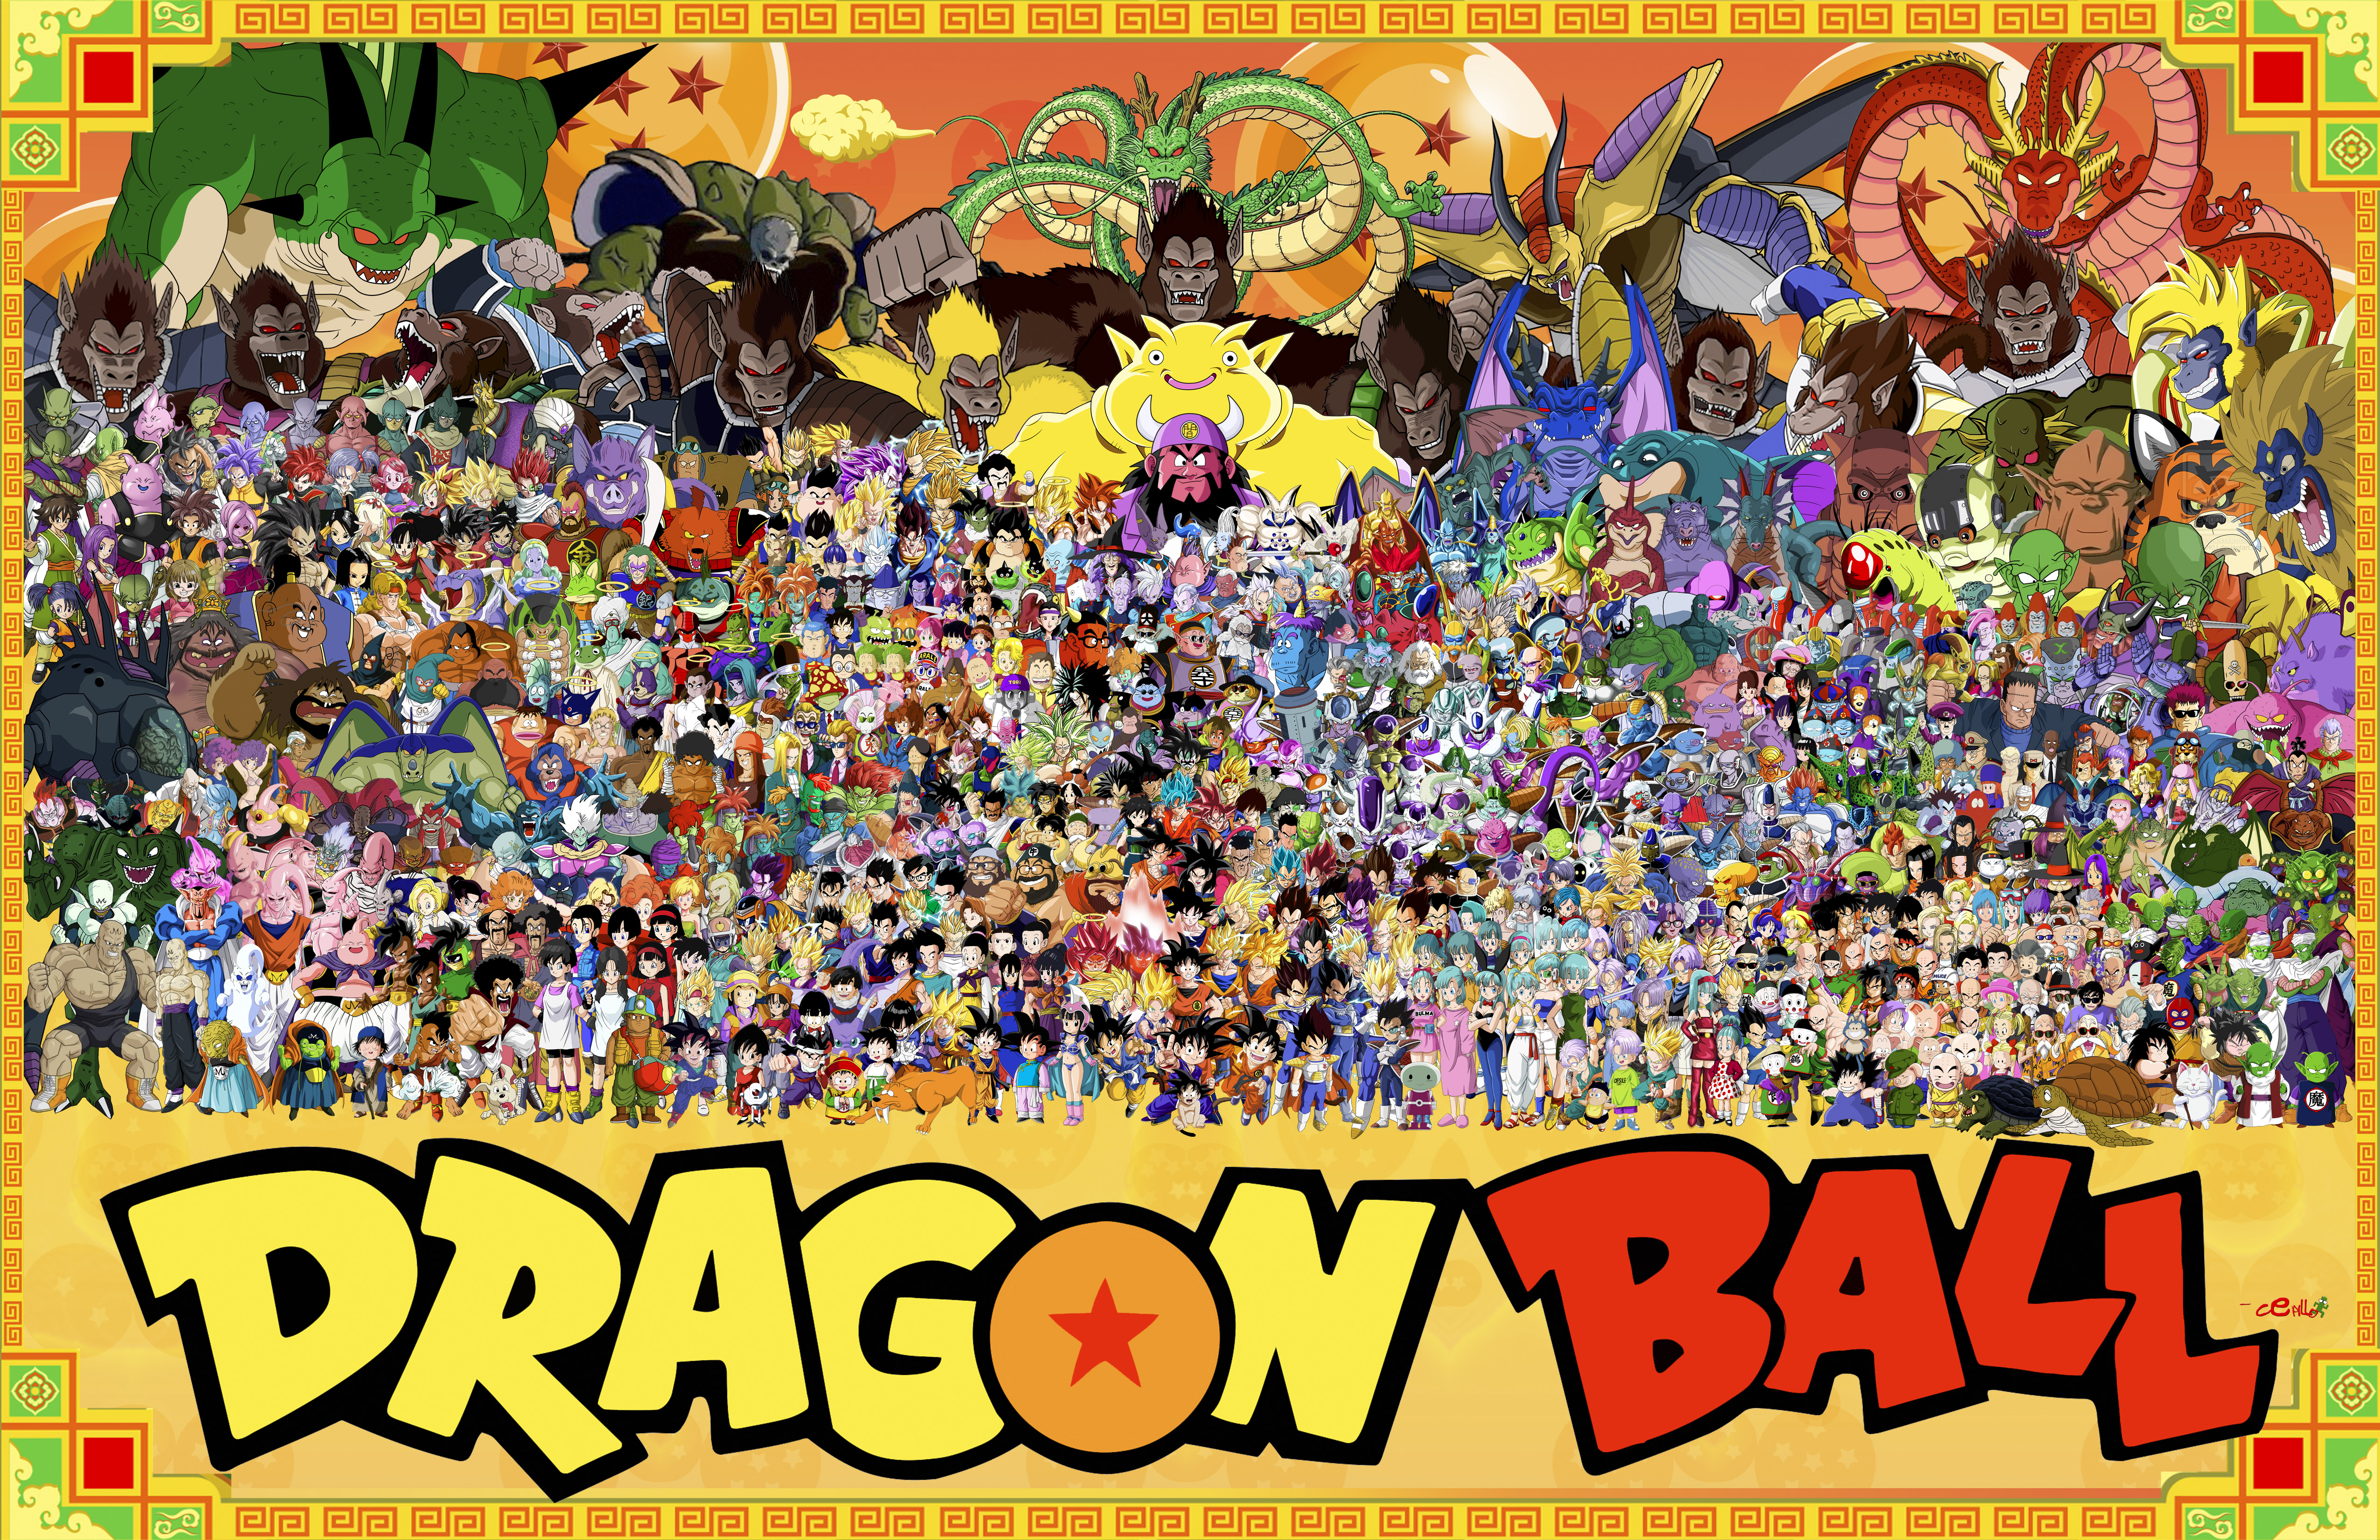 Dragon Ball Z Wallpaper All Characters - HD Wallpaper 